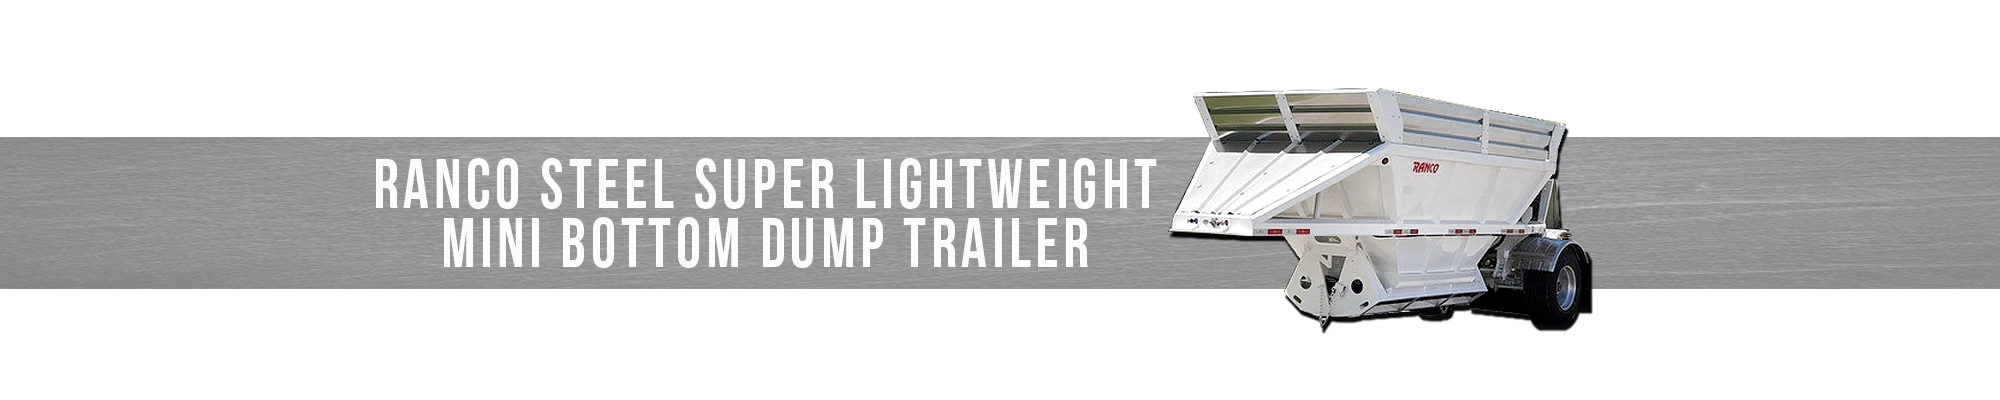 RANCO Steel Super Lightweight Mini Bottom Dump Trailer